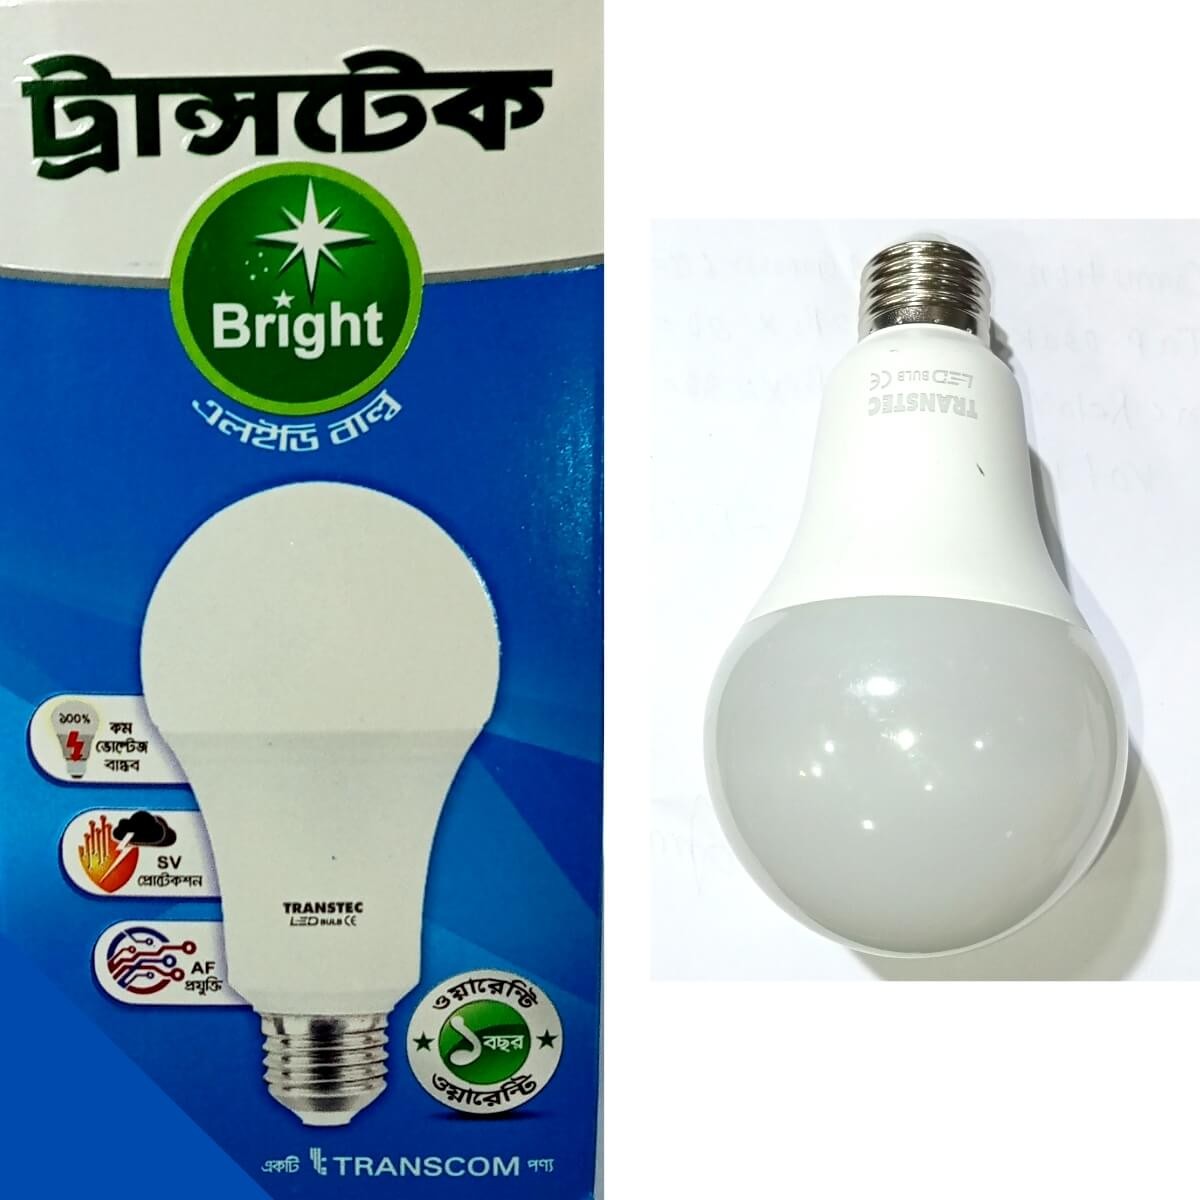 Transtec Bright 18Watt LED Bulb প্যাচ টাইপ... BD